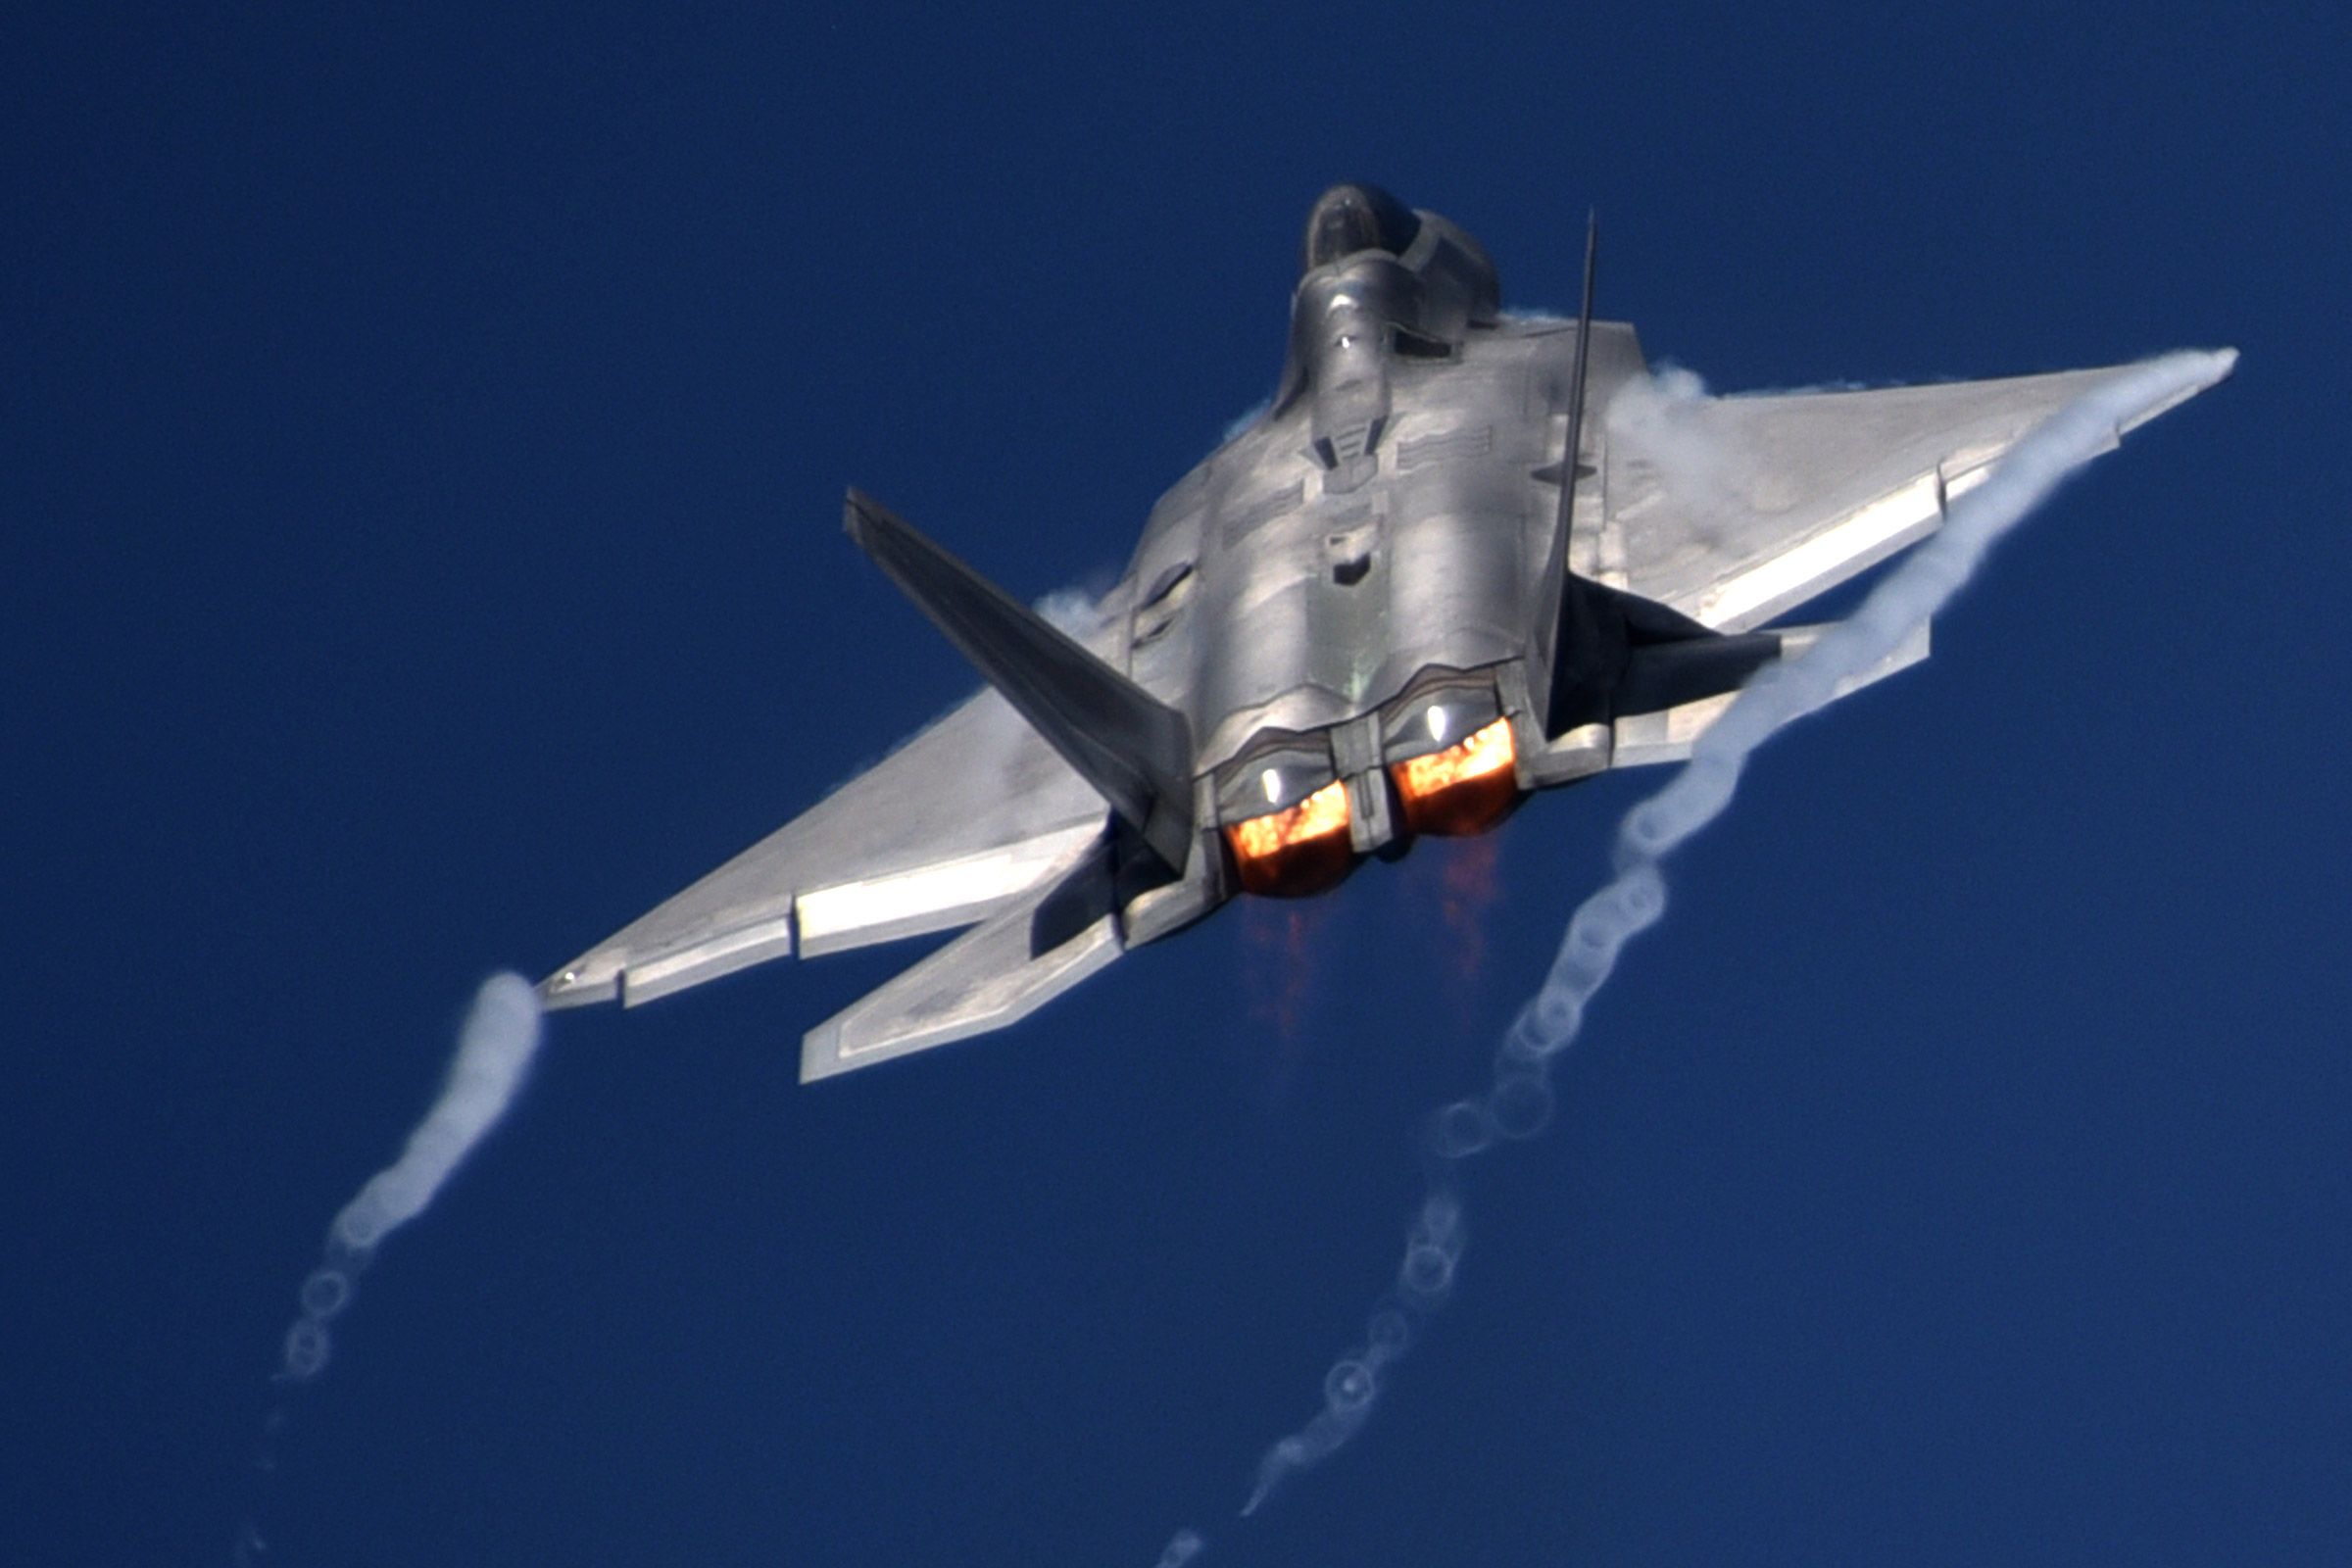 F-22 Raptor During Take Off With Afterburner